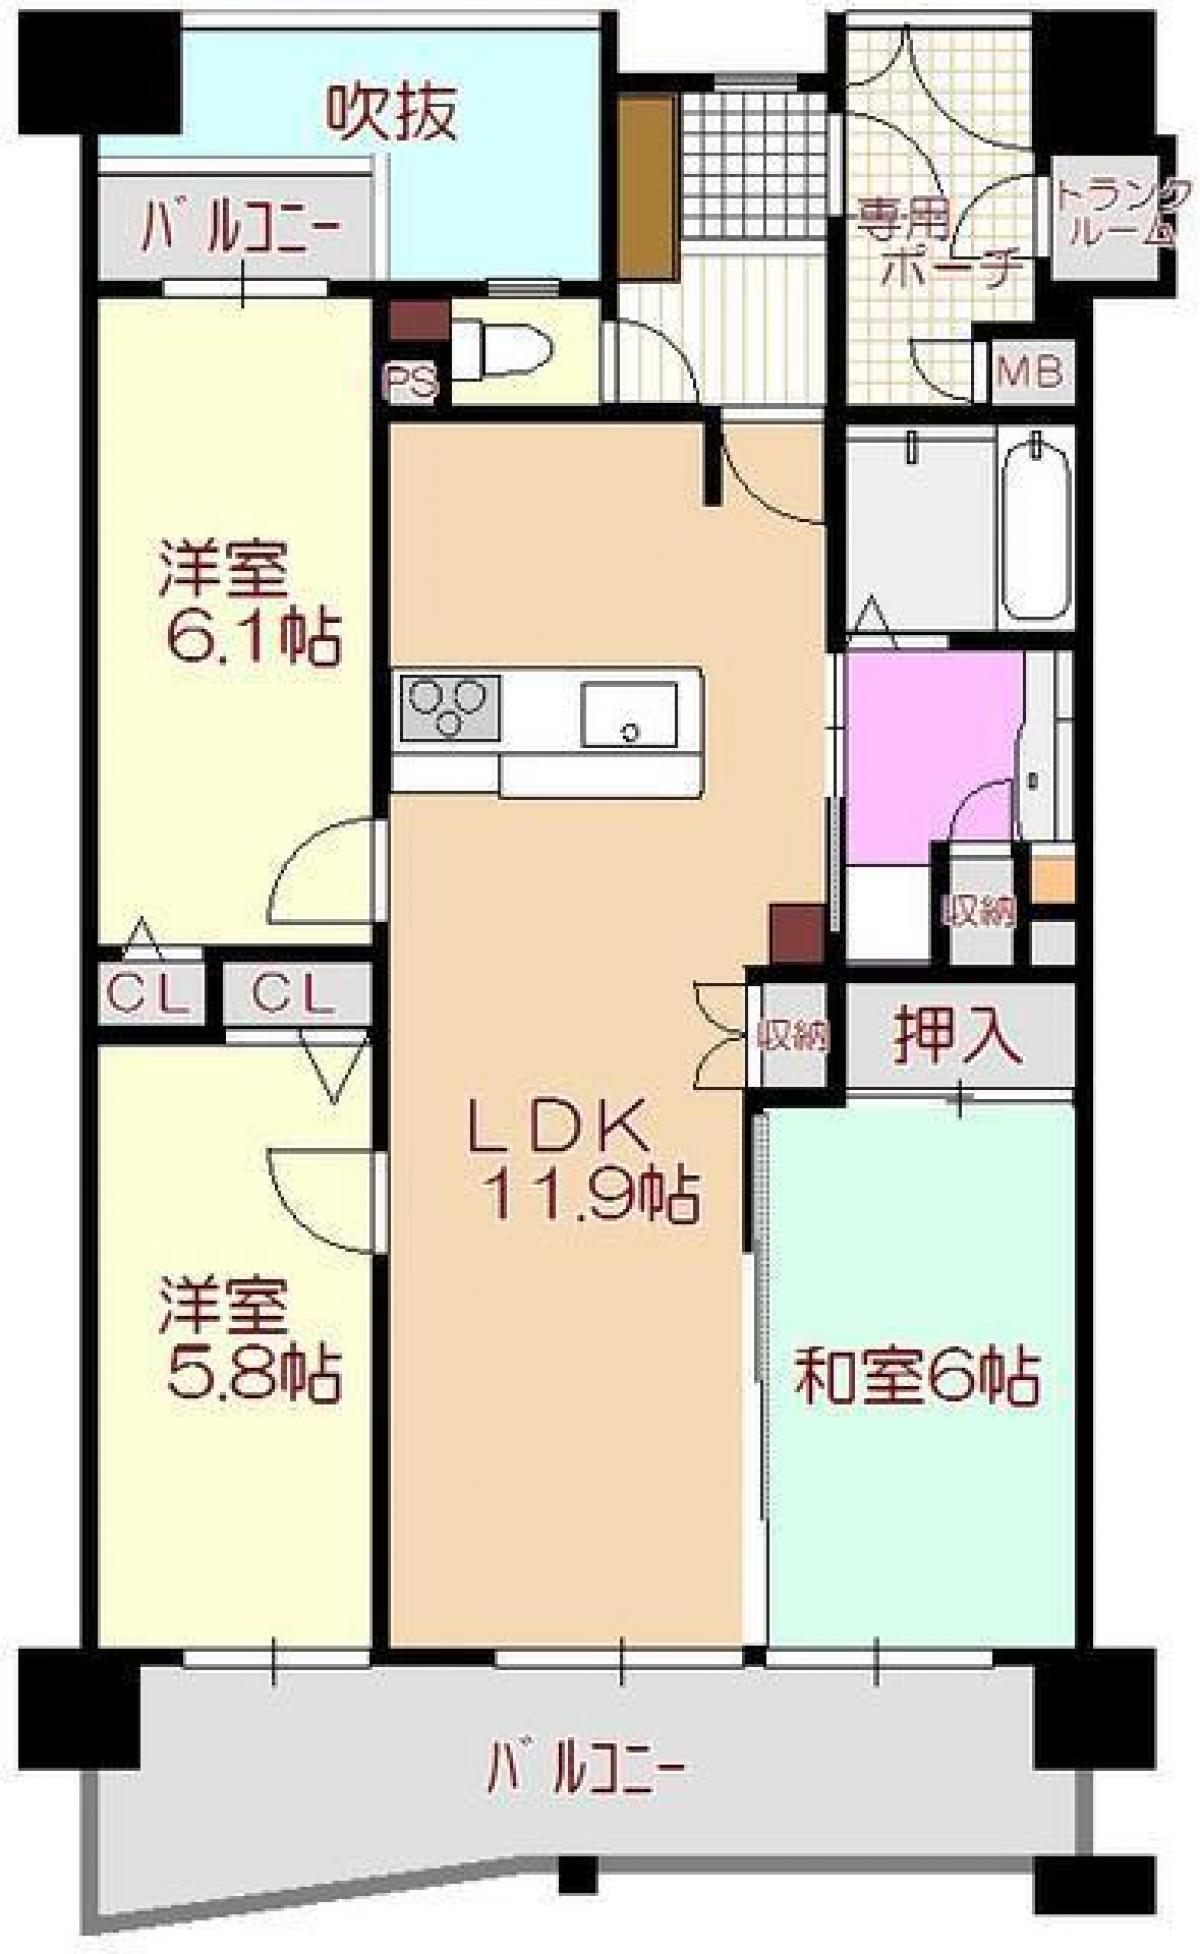 Picture of Apartment For Sale in Kitakyushu Shi Yahatanishi Ku, Fukuoka, Japan